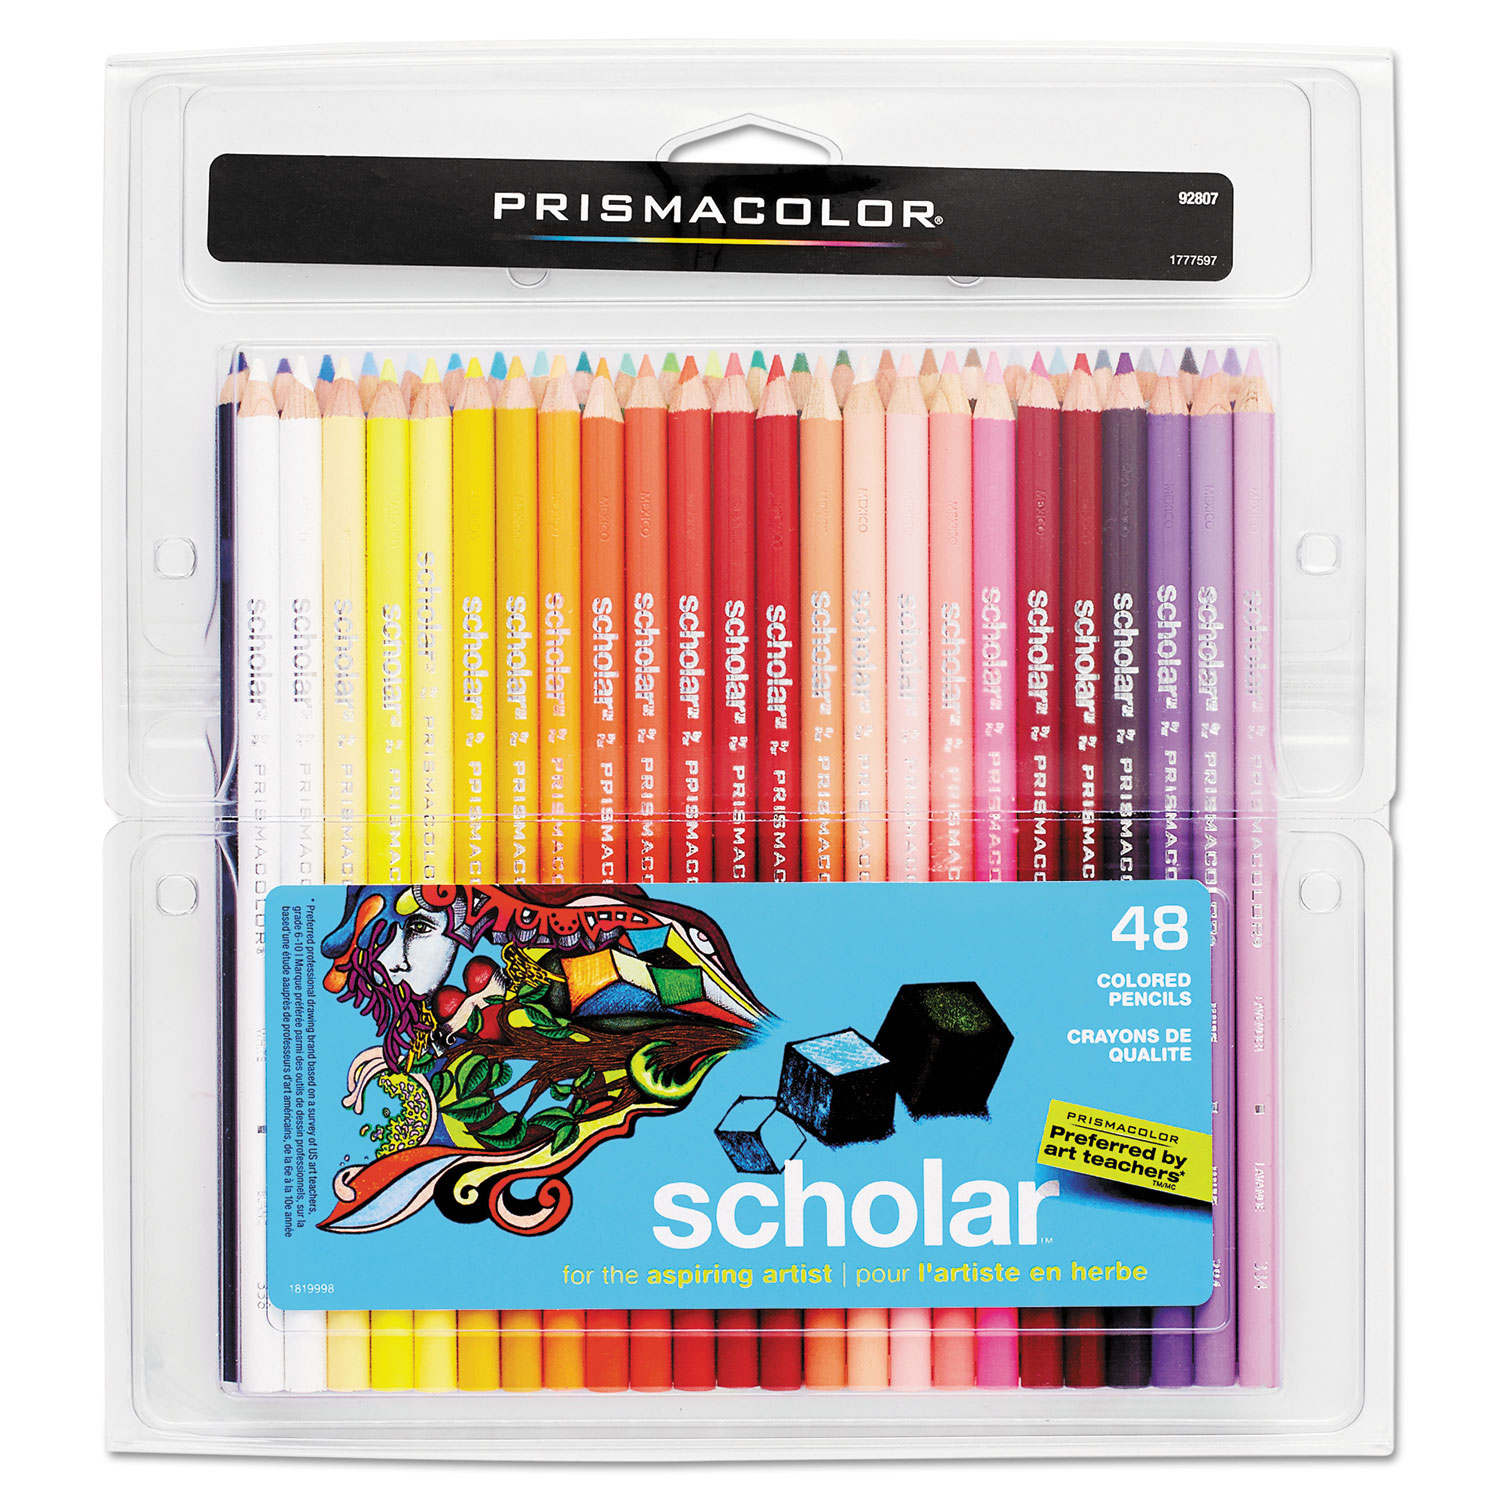  Prismacolor 92807 Scholar Colored Pencil Set, 3 mm, HB (#2.5), Assorted Lead/Barrel Colors, 48/Pack (SAN92807) 